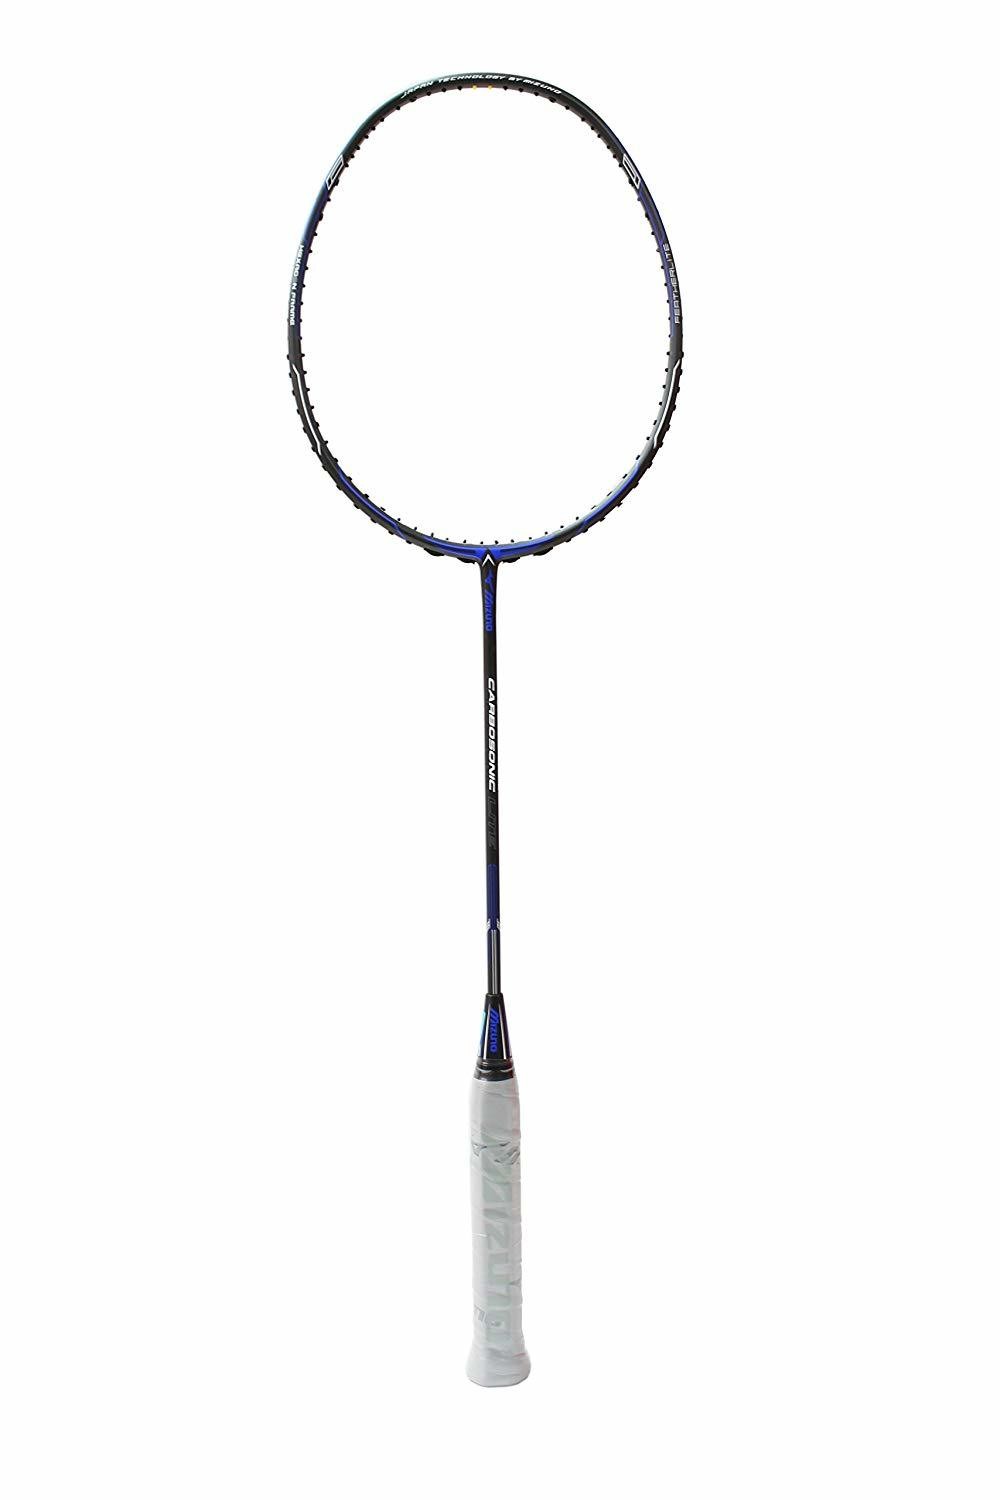 Mizuno Carbosonic Lite Badminton Racquet